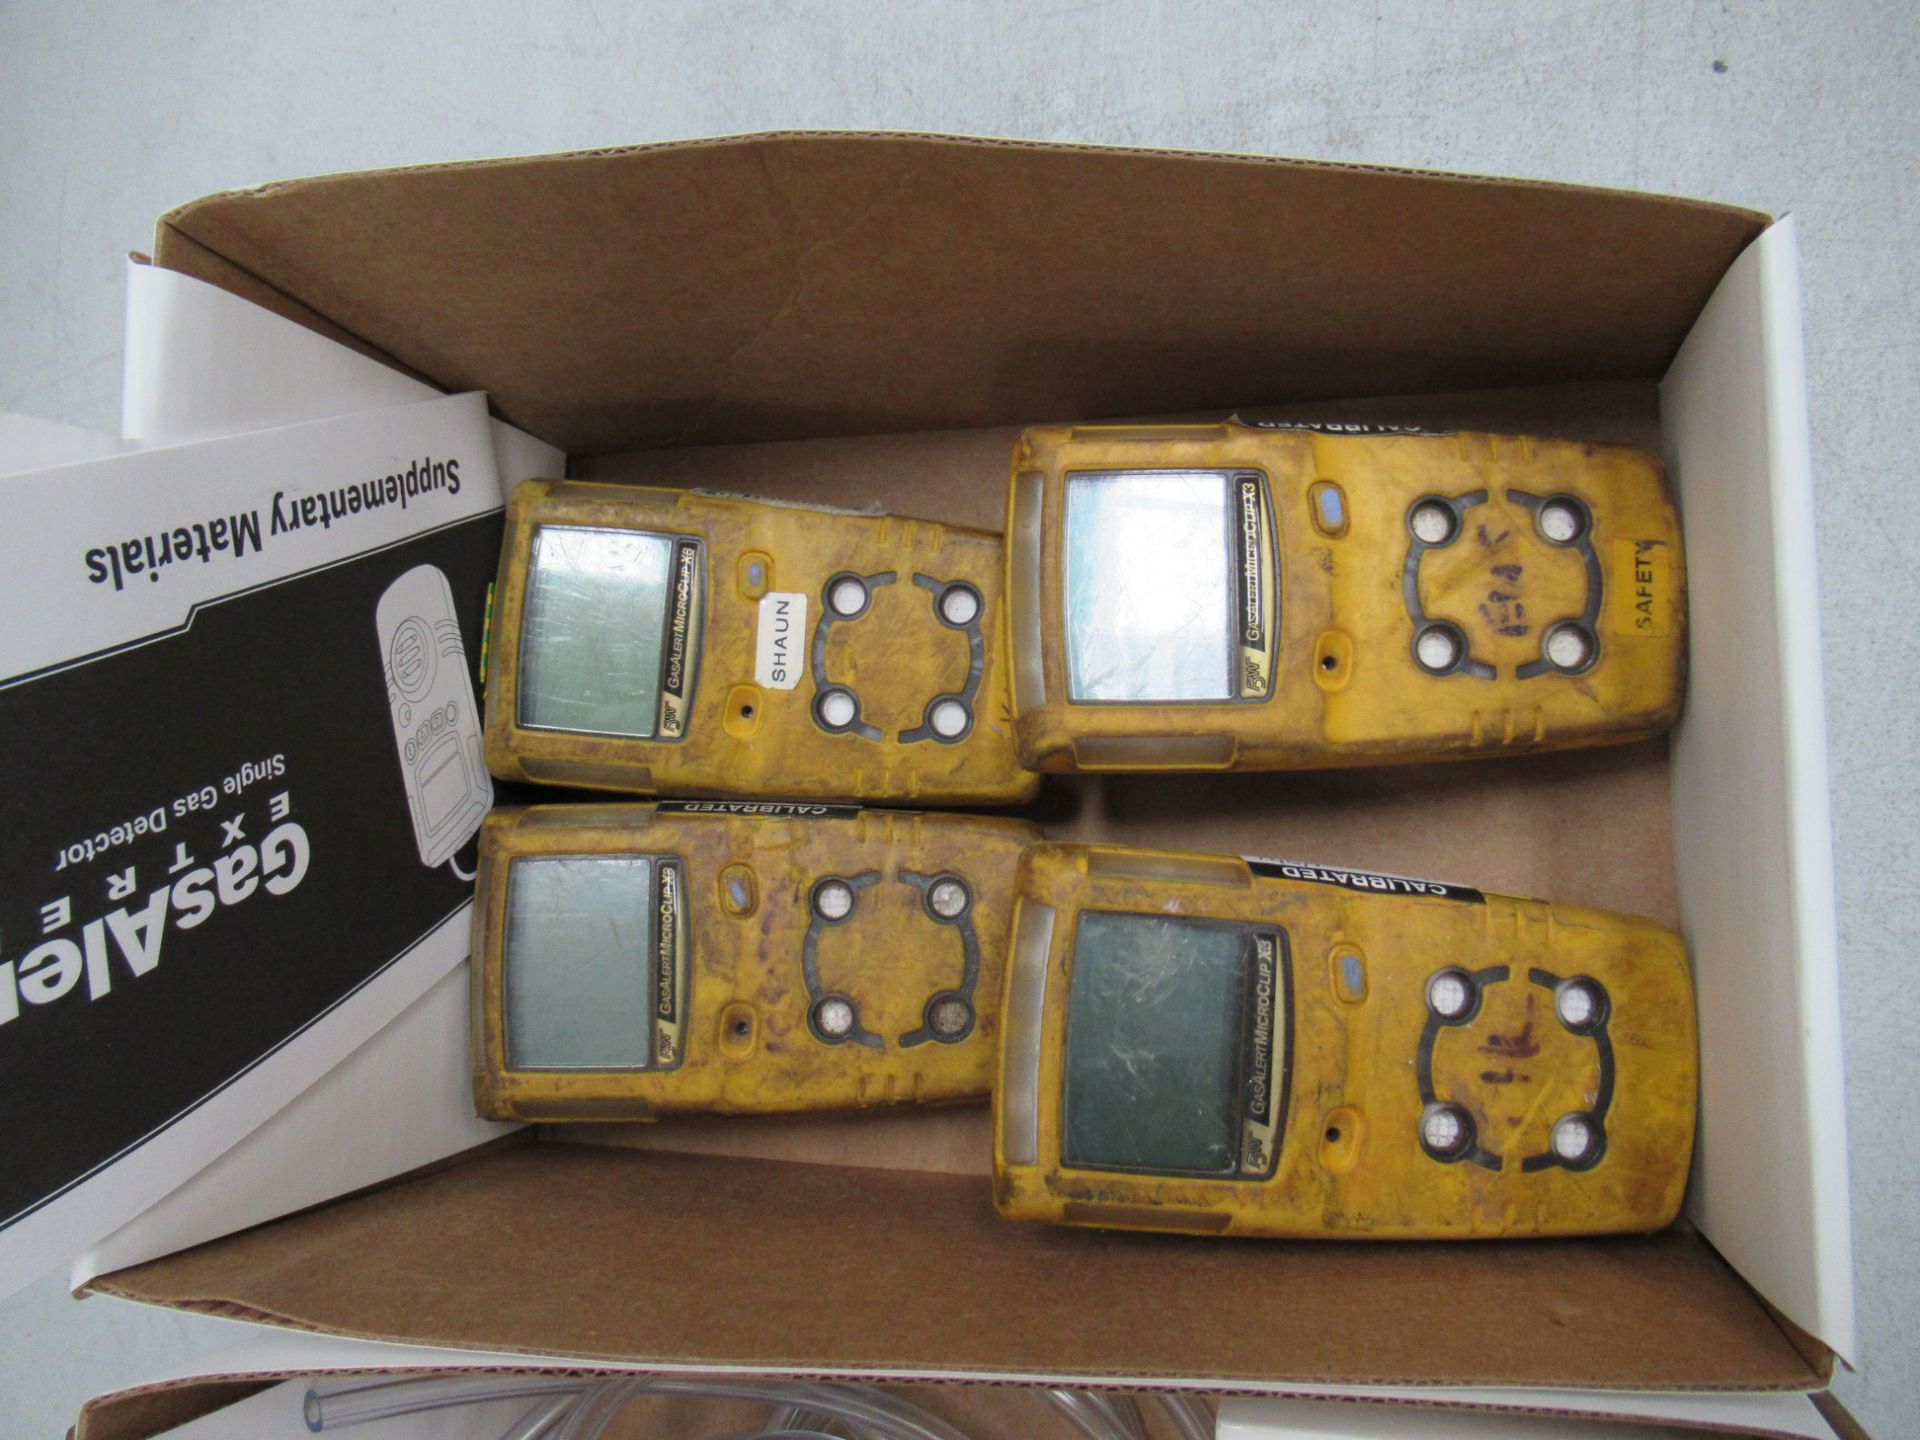 7x BW (By Honeywell) Gas Detectors - 3x Gas Alert Quattro; 4x Gas Alert Microchip X3 - Image 4 of 4